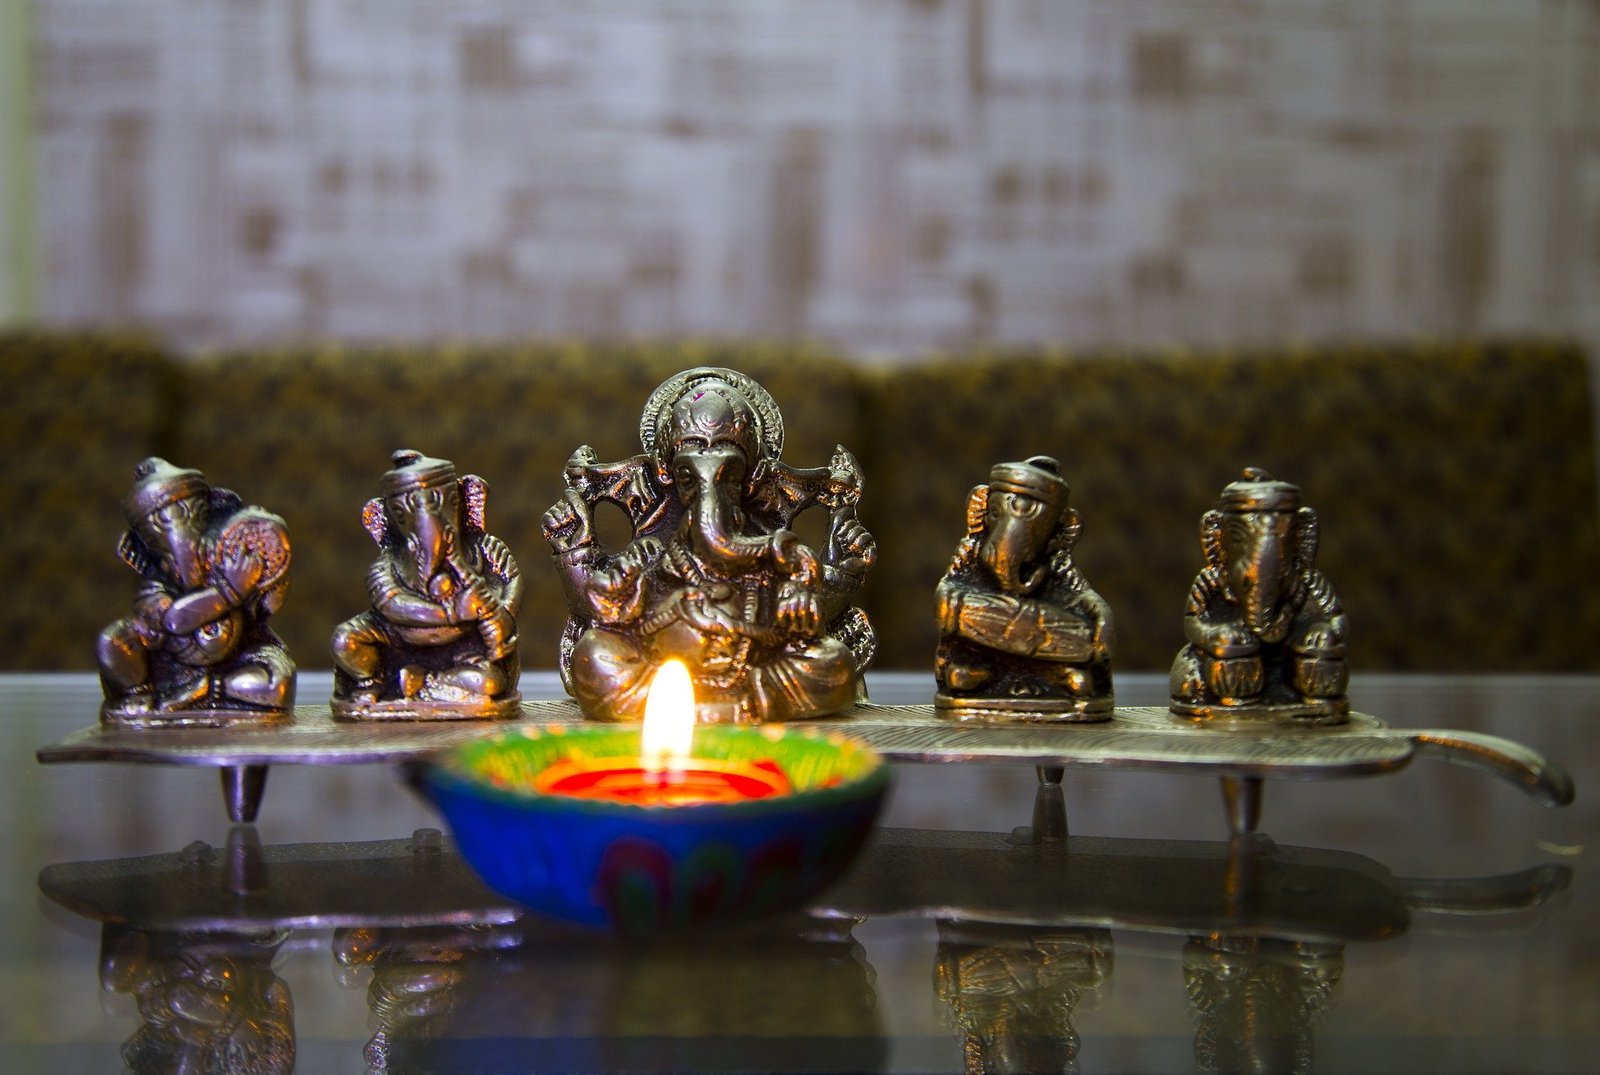 illuminated-lamp-infront-of-the-lord-ganesha-replica-idol